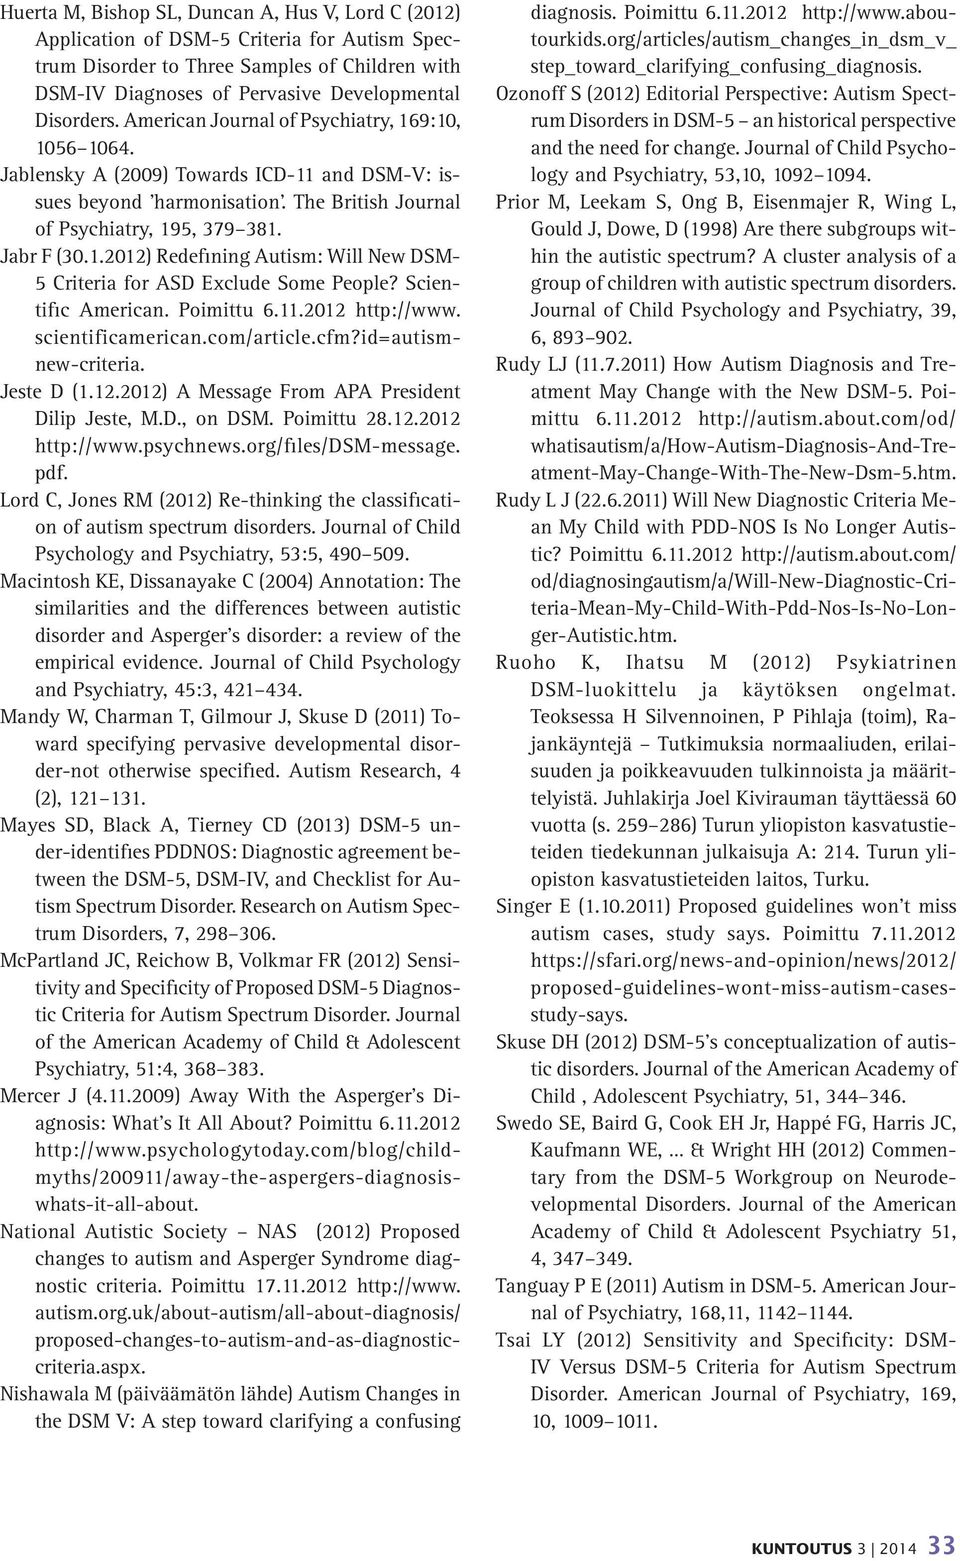 Scientific American. Poimittu 6.11.2012 http://www. scientificamerican.com/article.cfm?id=autismnew-criteria. Jeste D (1.12.2012) A Message From APA President Dilip Jeste, M.D., on DSM. Poimittu 28.